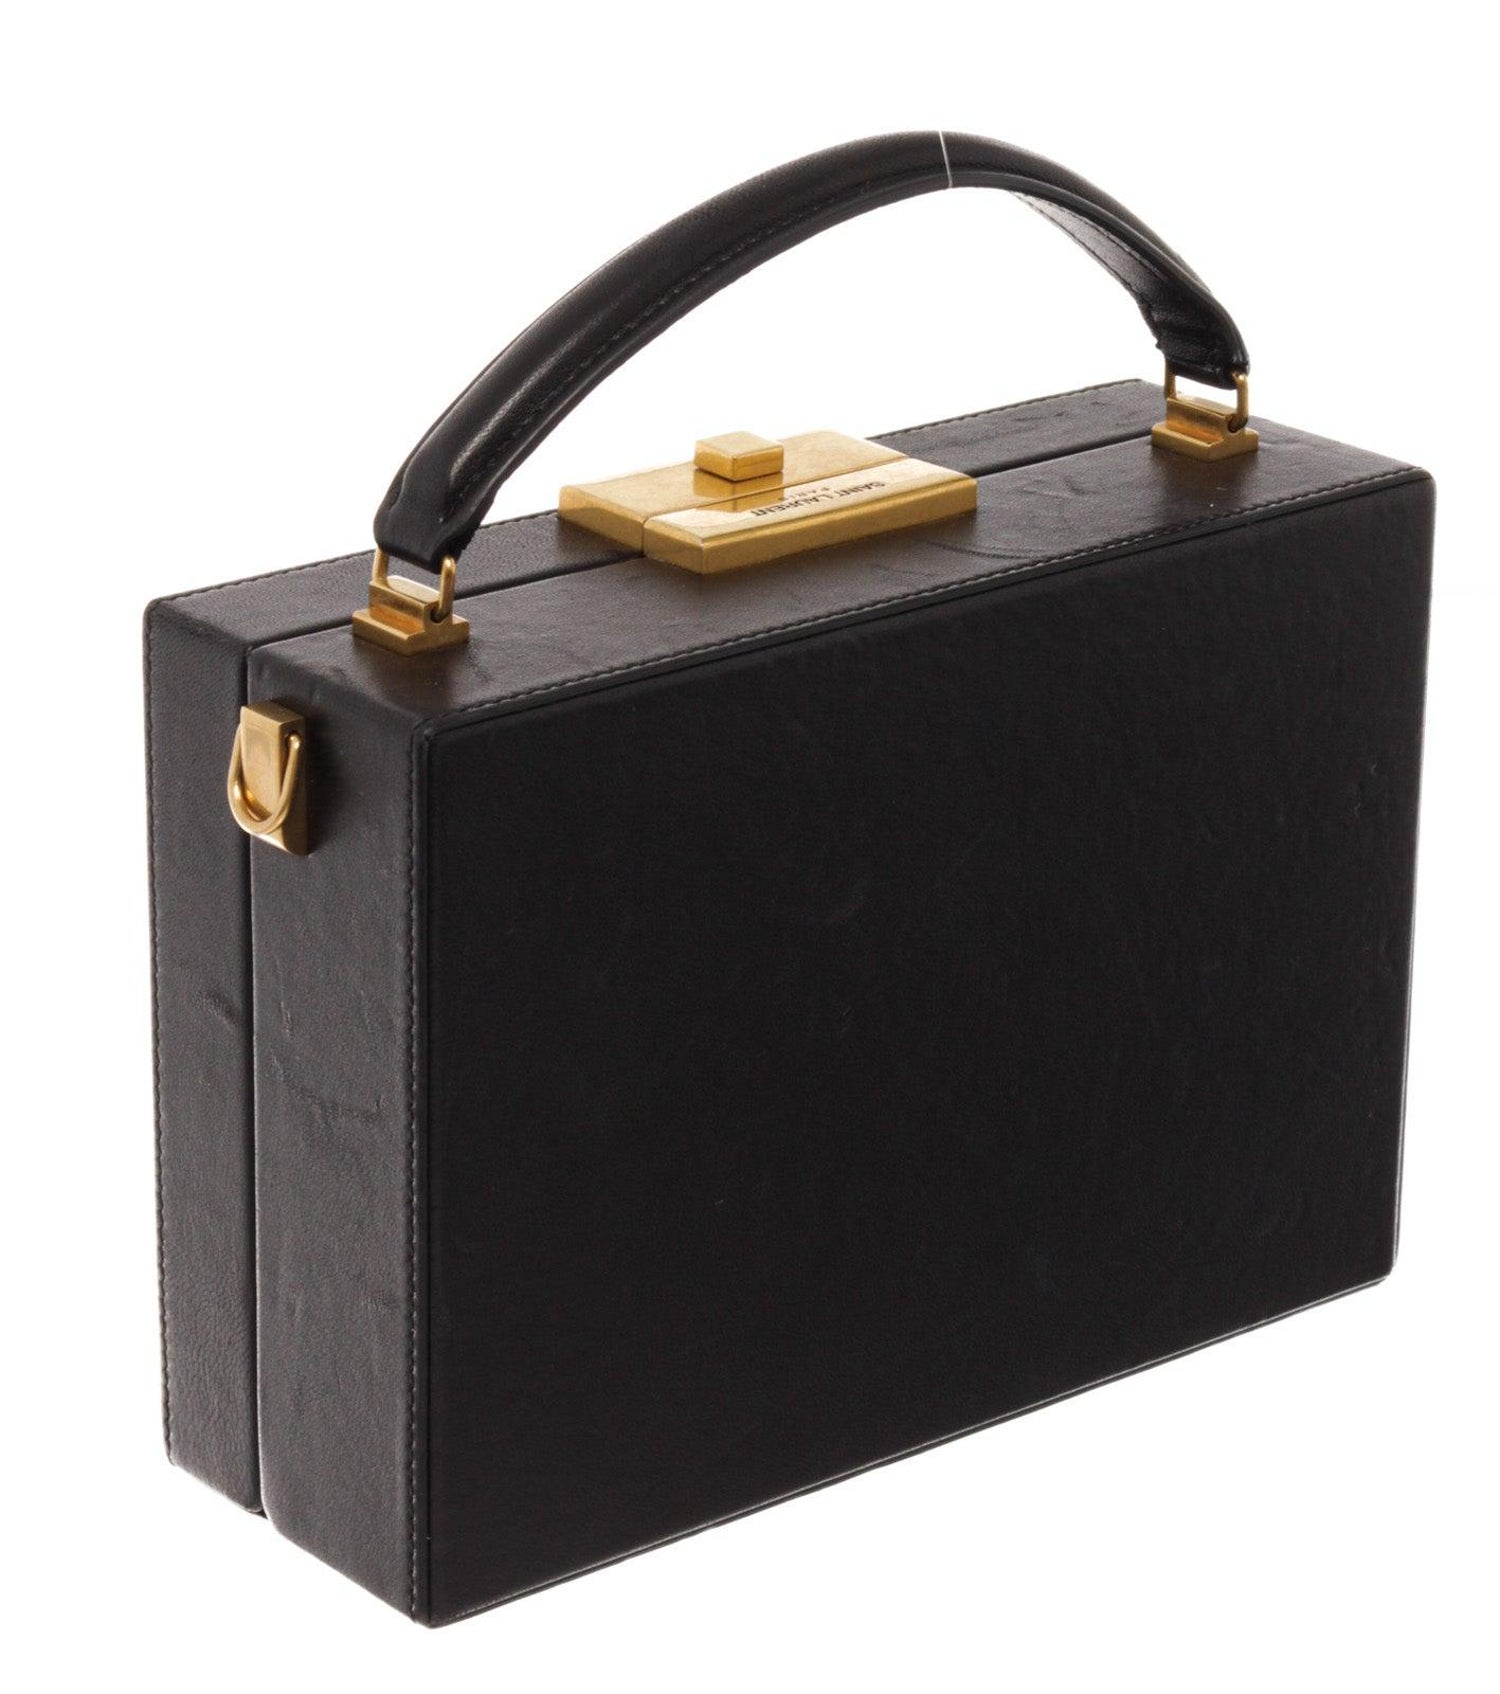 Chanel Black Vanity Case Limited Edition Rare Home Decor Cosmetic Jewelry  Box